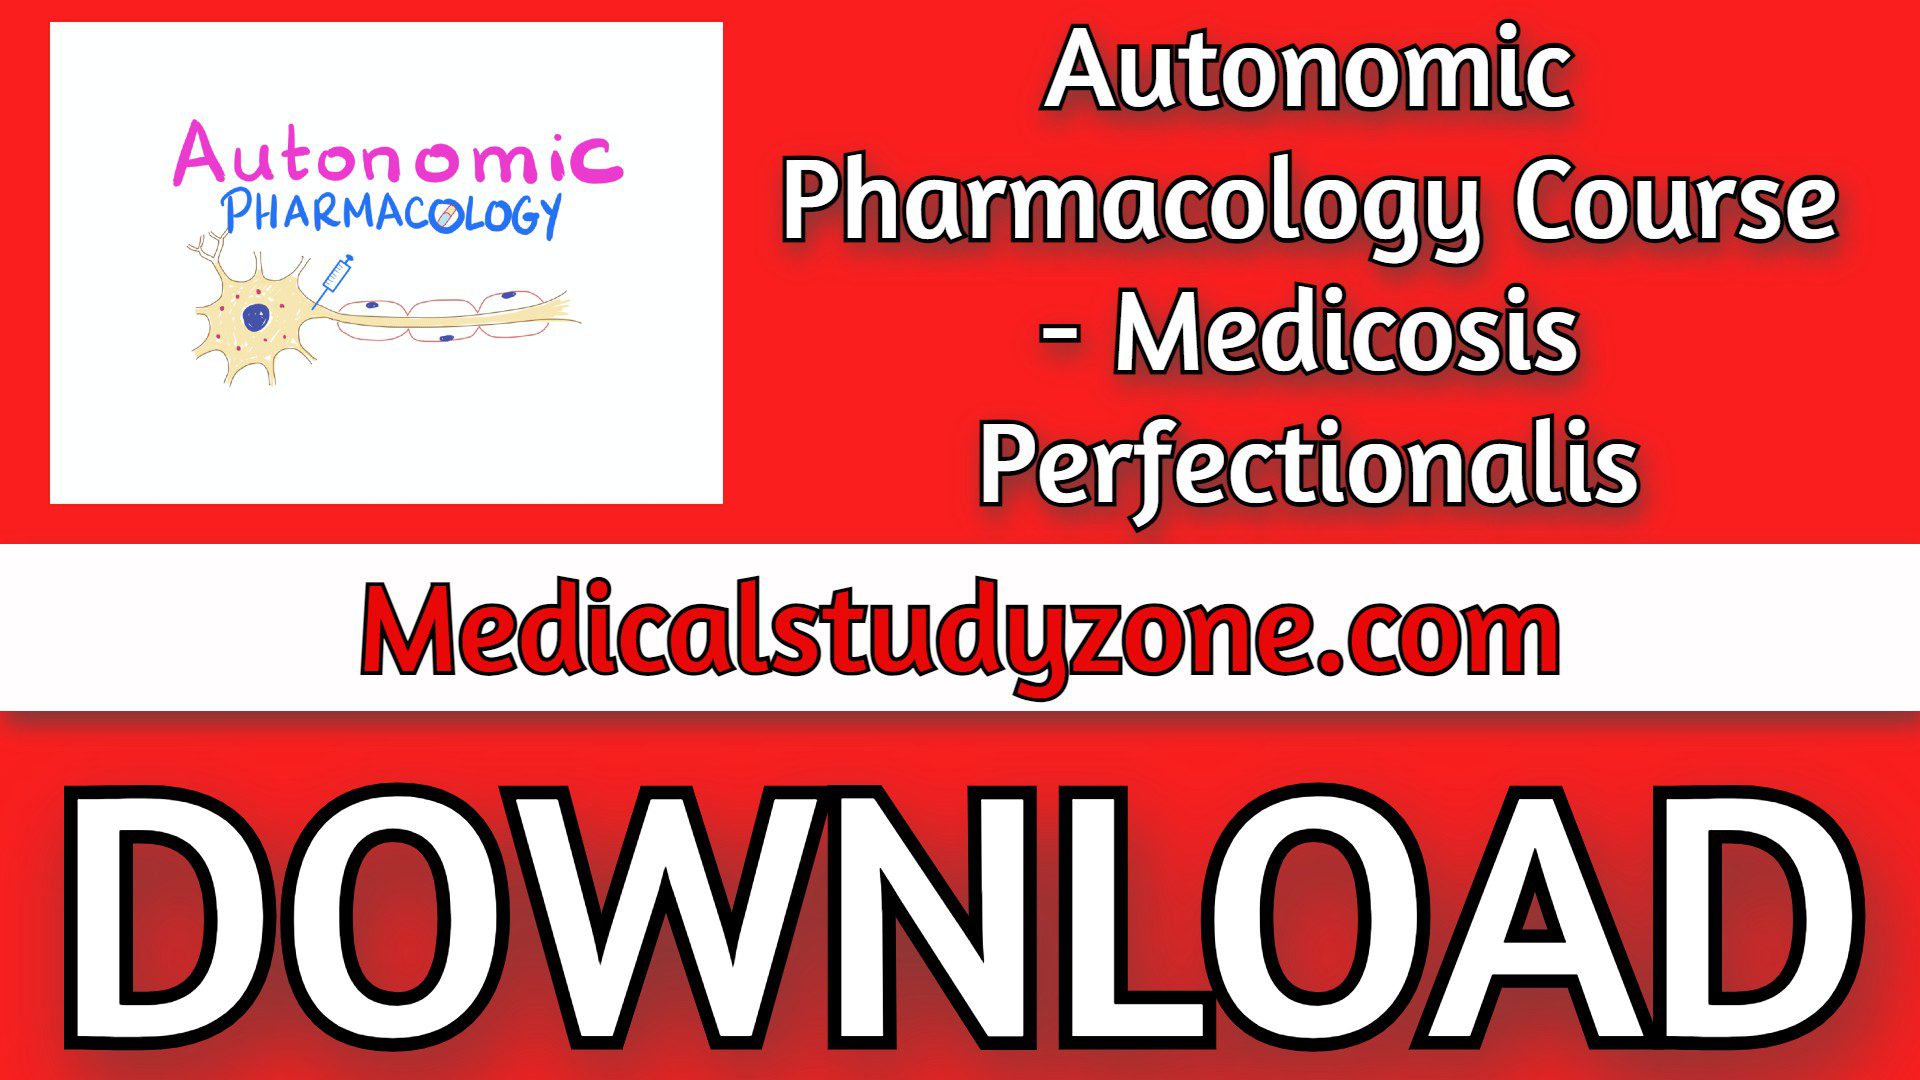 Autonomic Pharmacology Course 2022 - Medicosis Perfectionalis Free Download